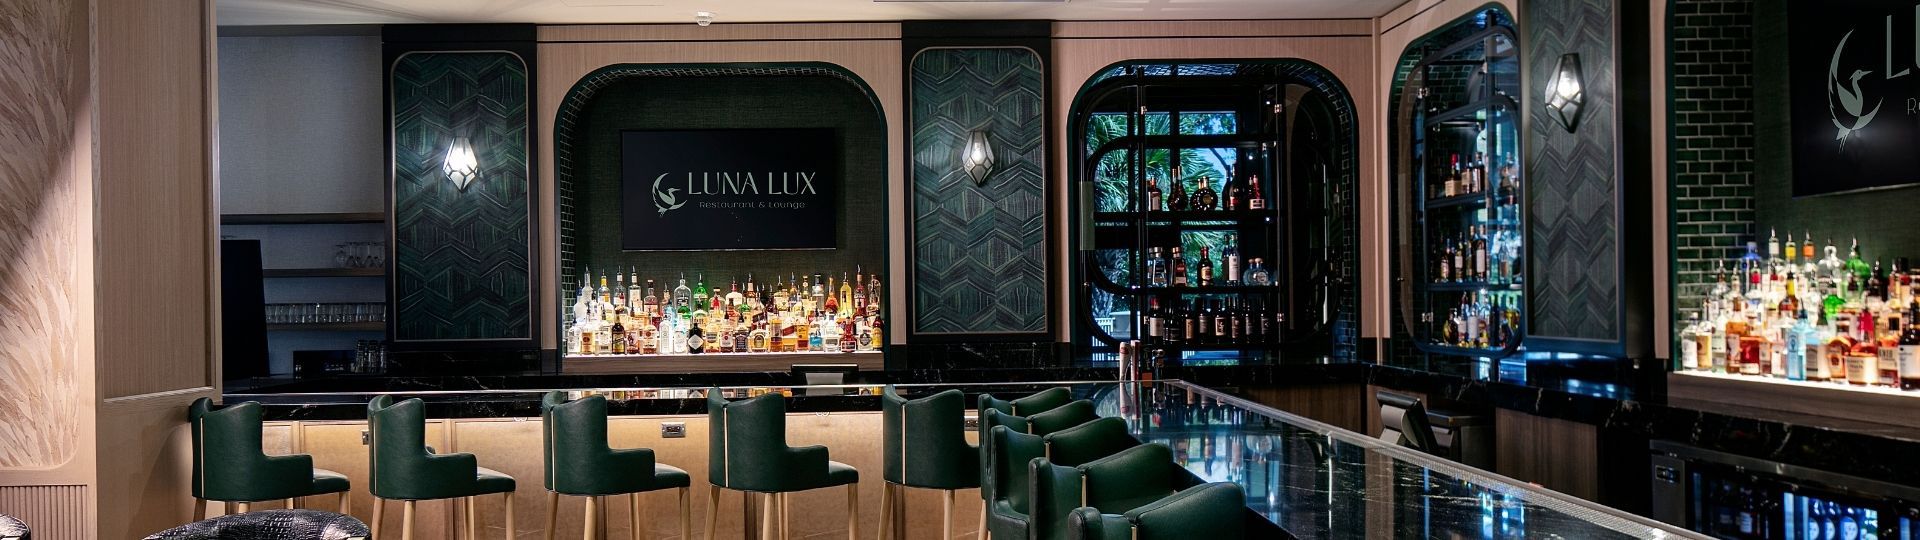 Luna Lux Restaurant & Lounge, Florida - Special Offers